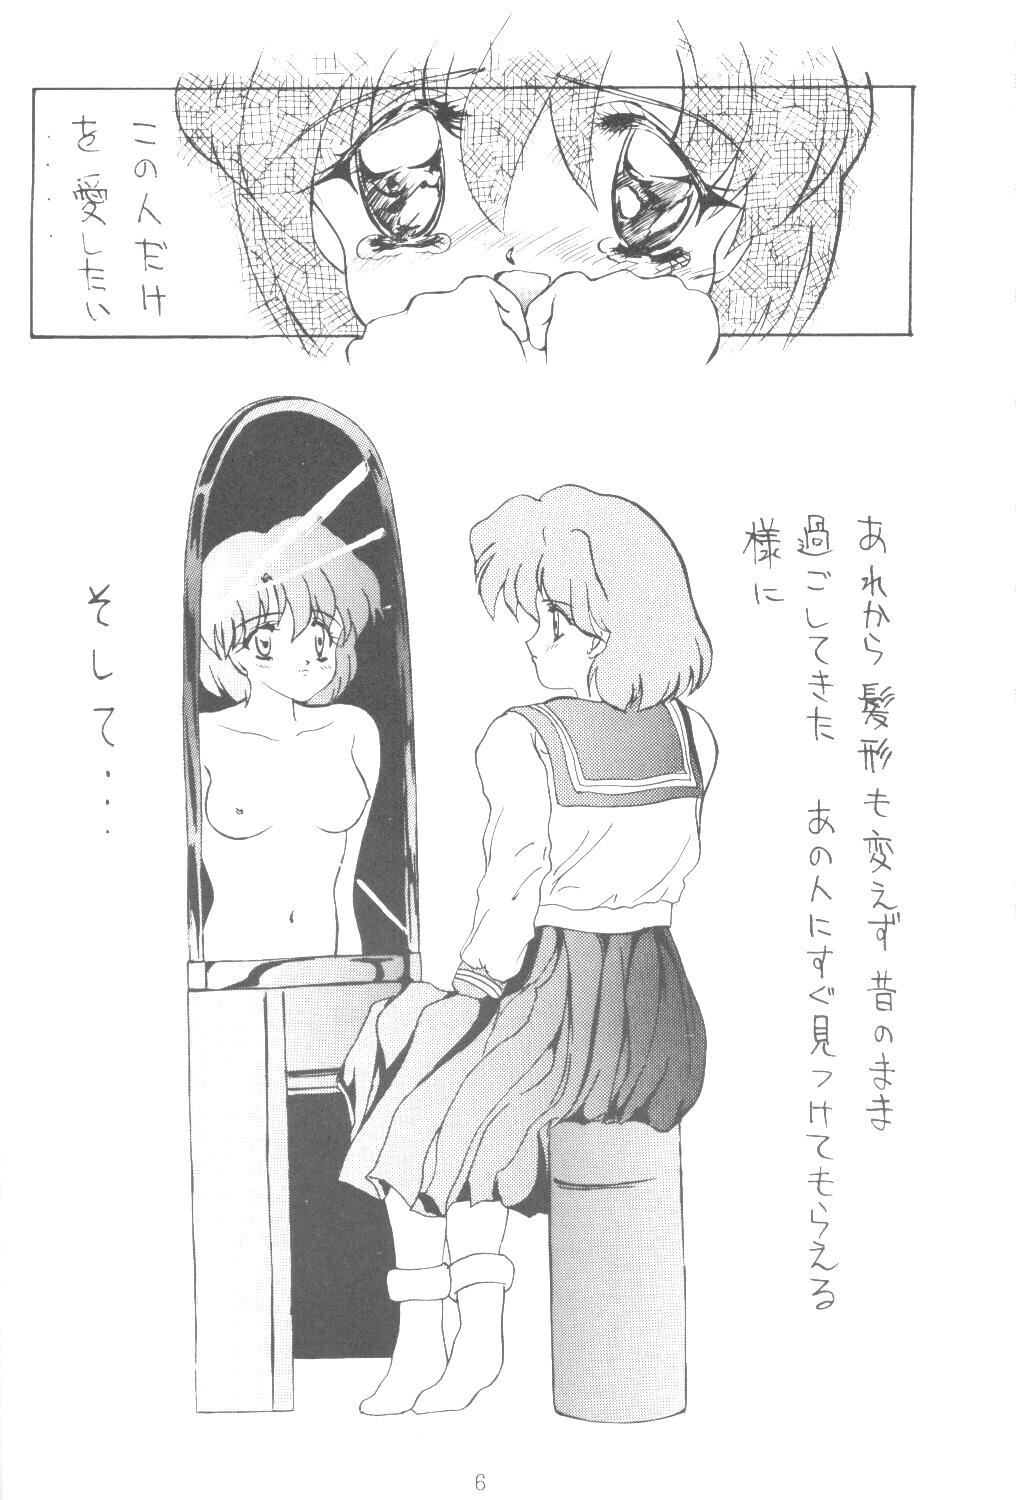 Ex Girlfriend ALIVE AMI LOST - Sailor moon Male - Page 5